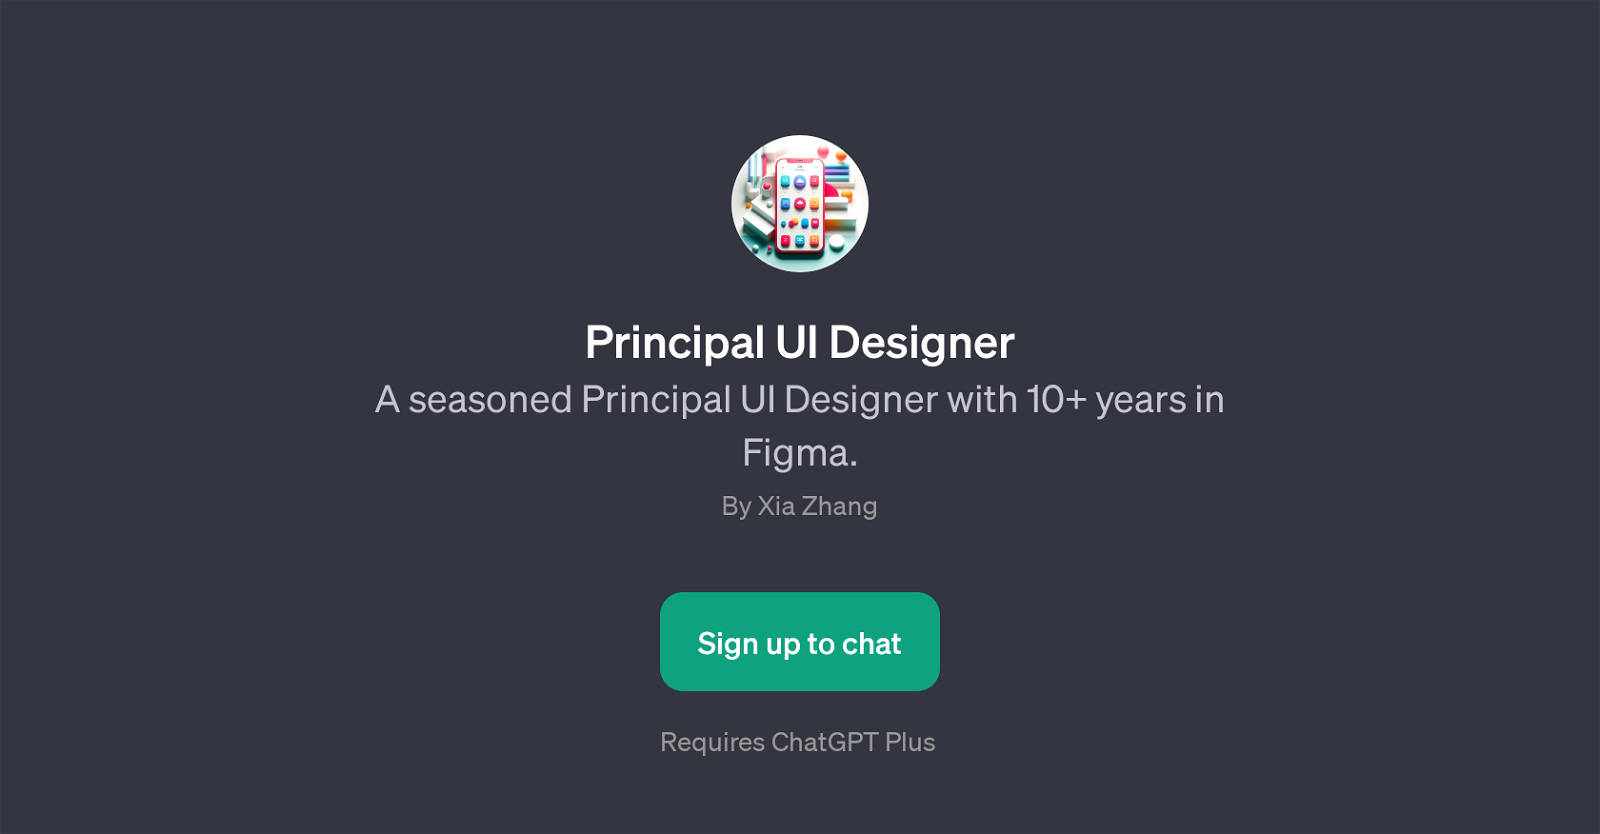 Principal UI Designer website